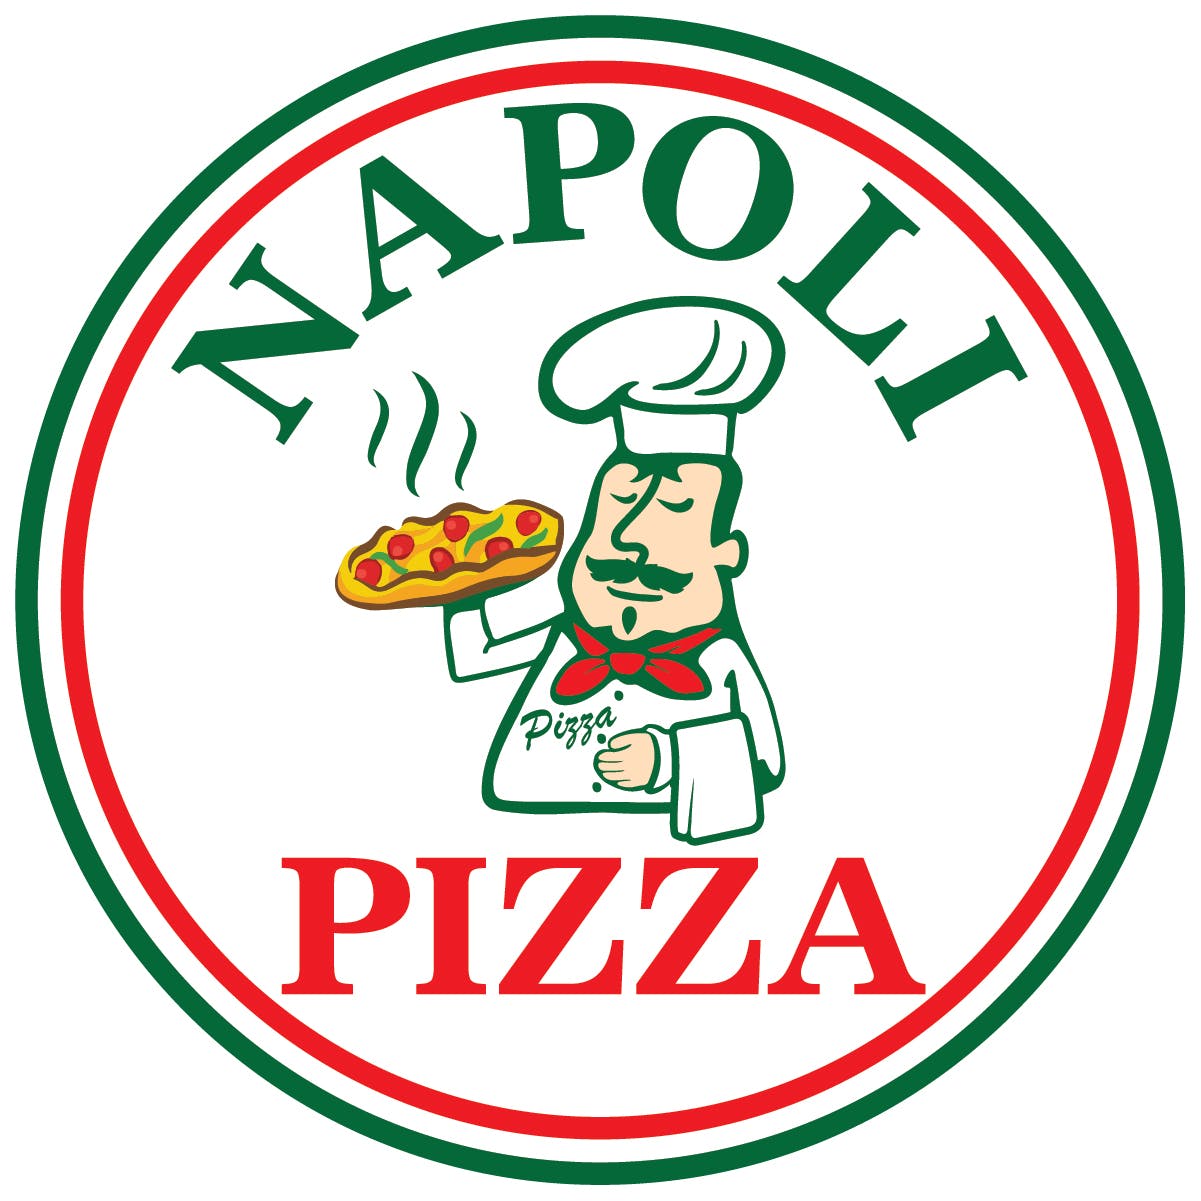 Napoli Pizza hero